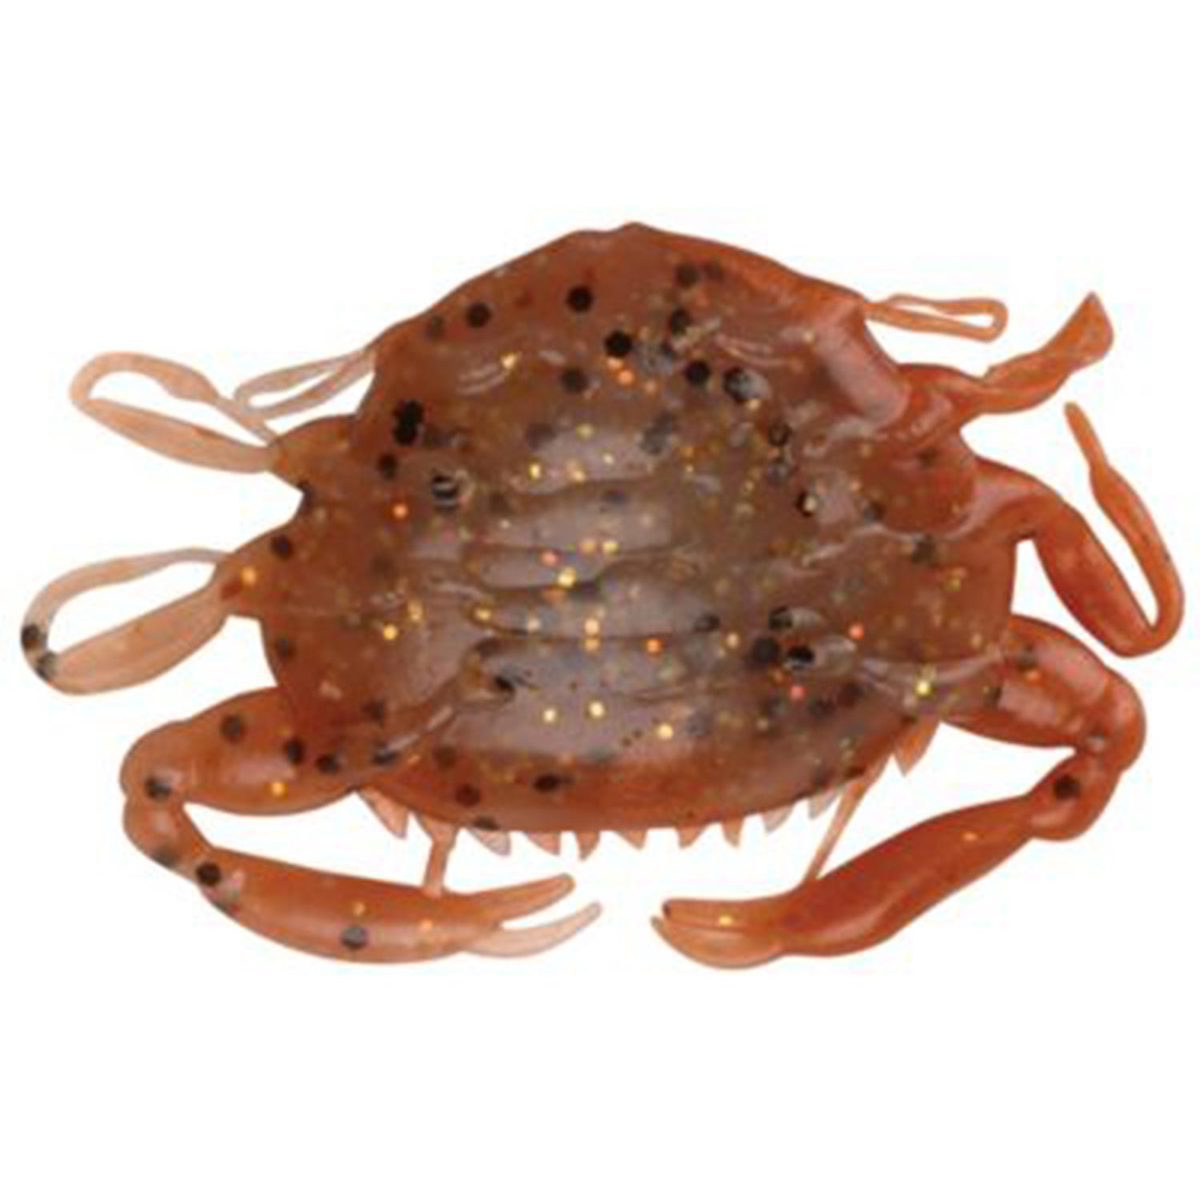 https://www.sportsmans.com/medias/berkley-gulp-peeler-crab-saltwater-soft-bait-new-penny-2in-1029480-1.jpg?context=bWFzdGVyfGltYWdlc3w4NDg5NHxpbWFnZS9qcGVnfGFXMWhaMlZ6TDJnME1pOW9NbU12T1RRNE56QXdNRE16T0RRMk1pNXFjR2N8YTMwY2EwZTljM2JhMjJiYTA0MDRlYzBhMGU2OGUxMGI3OThhOGYxMjk1YmZmMWVmYWU2Mjk3ZDg0NWYwYWFkYg